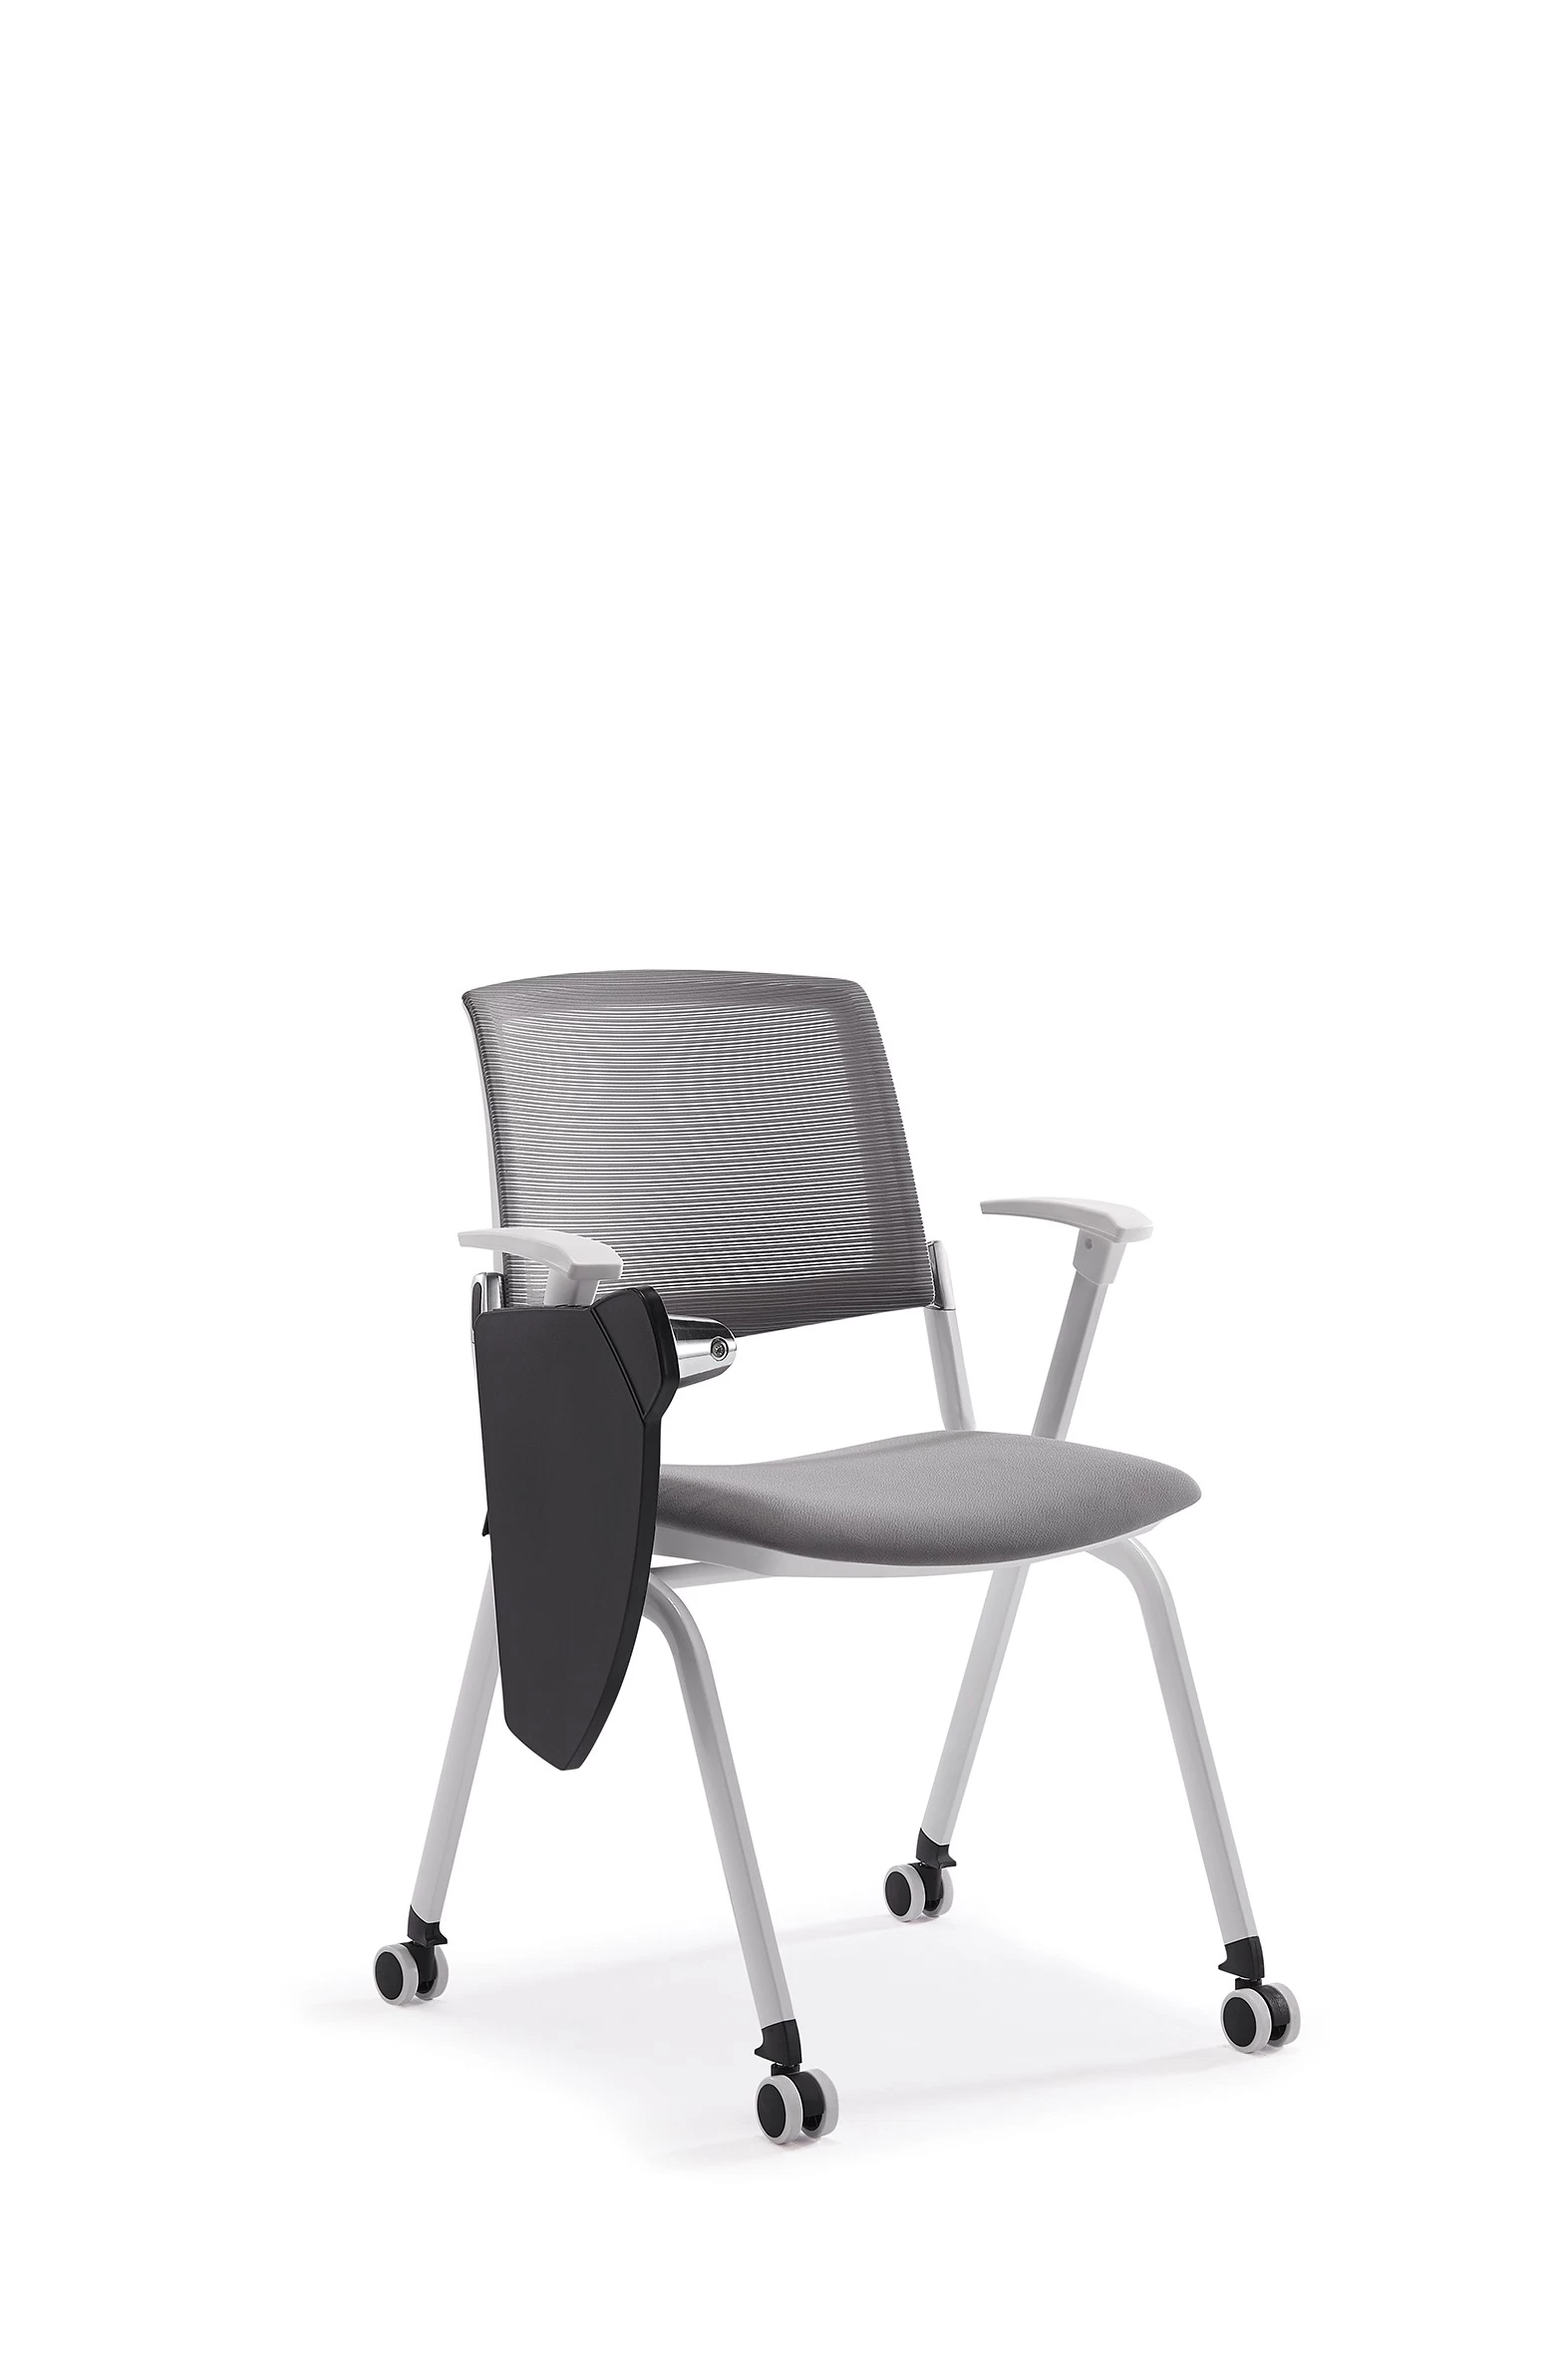 Newcity 1531经济培训椅热销销售学校附加写字板椅现代时尚培训椅与PP扶手供应商中国佛山质保5年